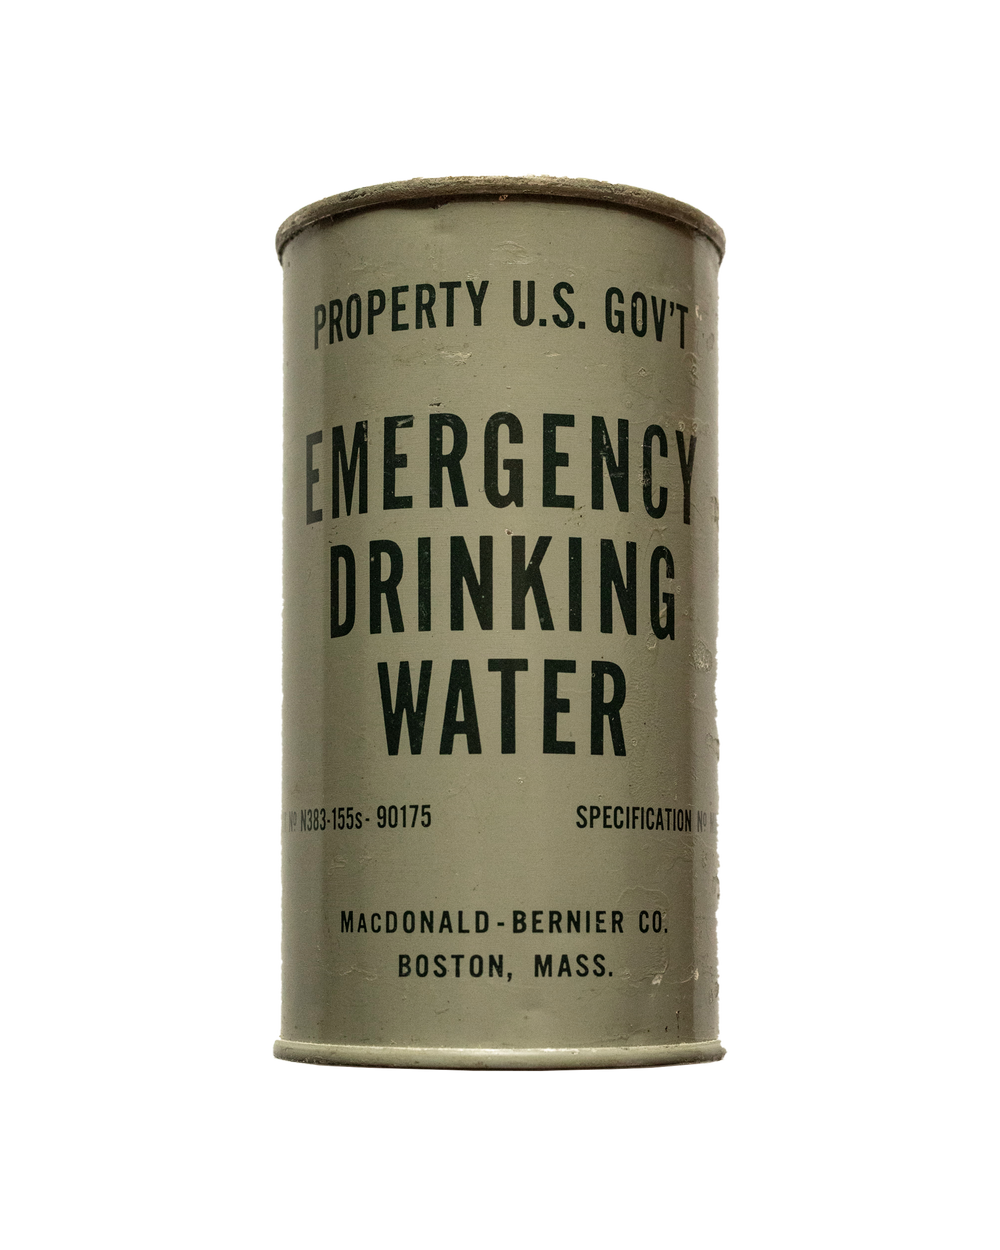 Agua potable de emergencia del ejército estadounidense de la Segunda Guerra Mundial